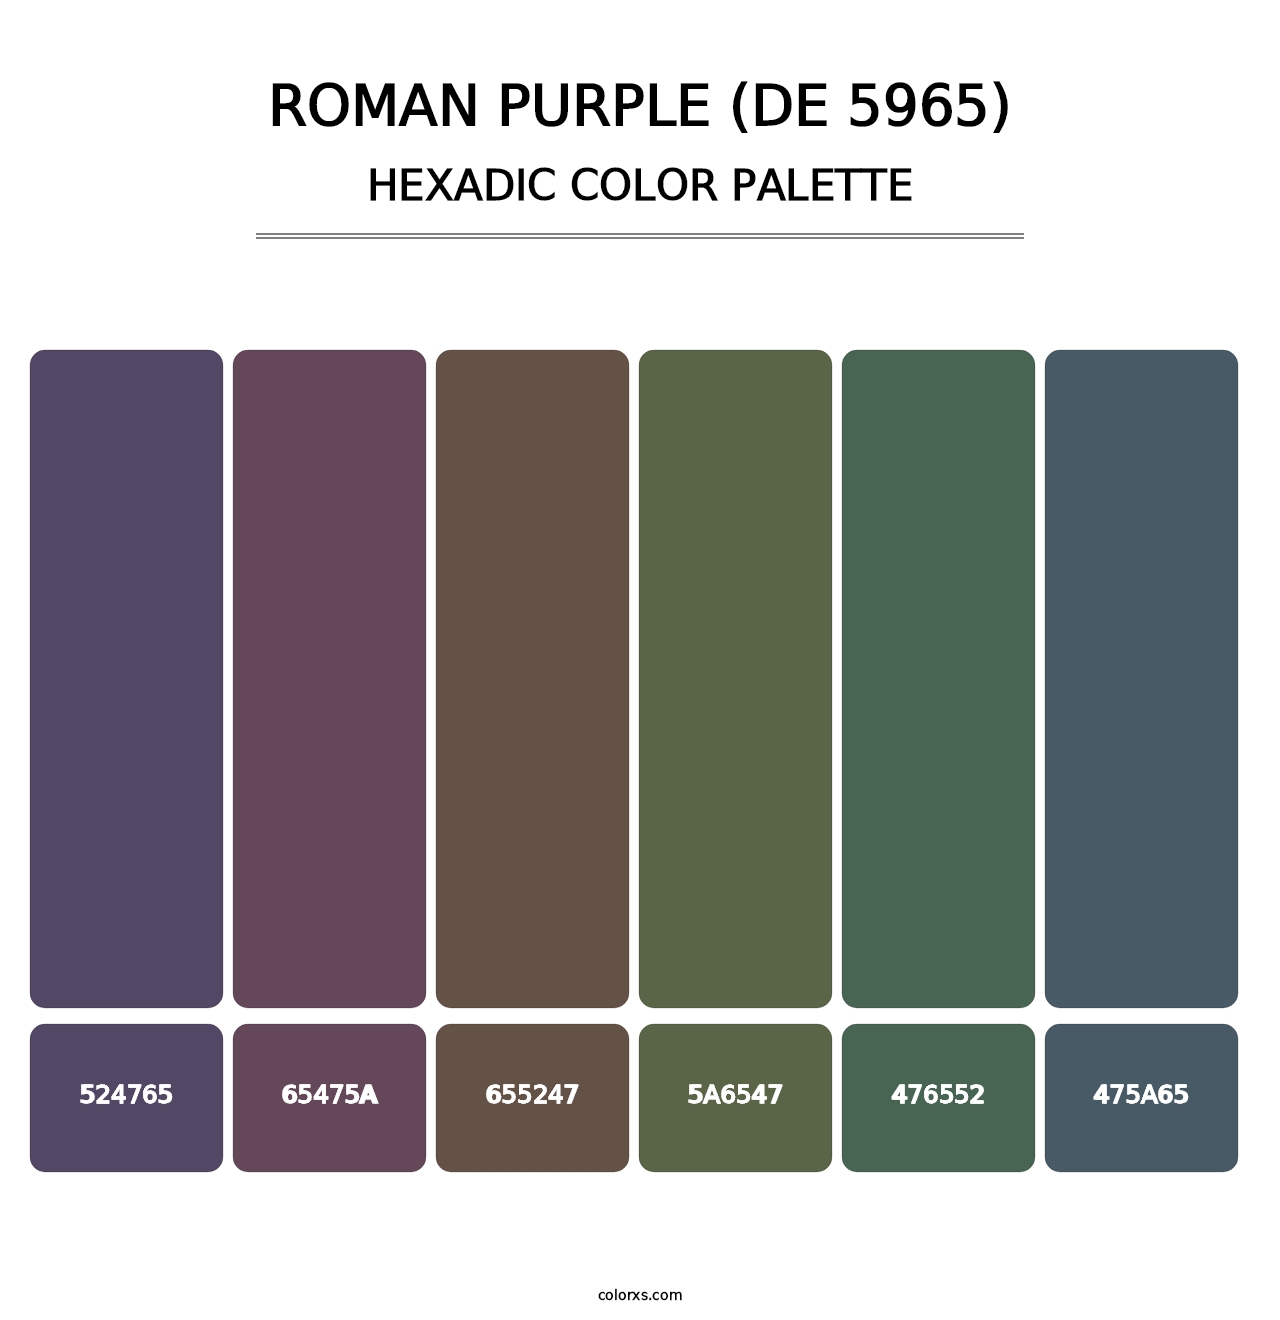 Roman Purple (DE 5965) - Hexadic Color Palette